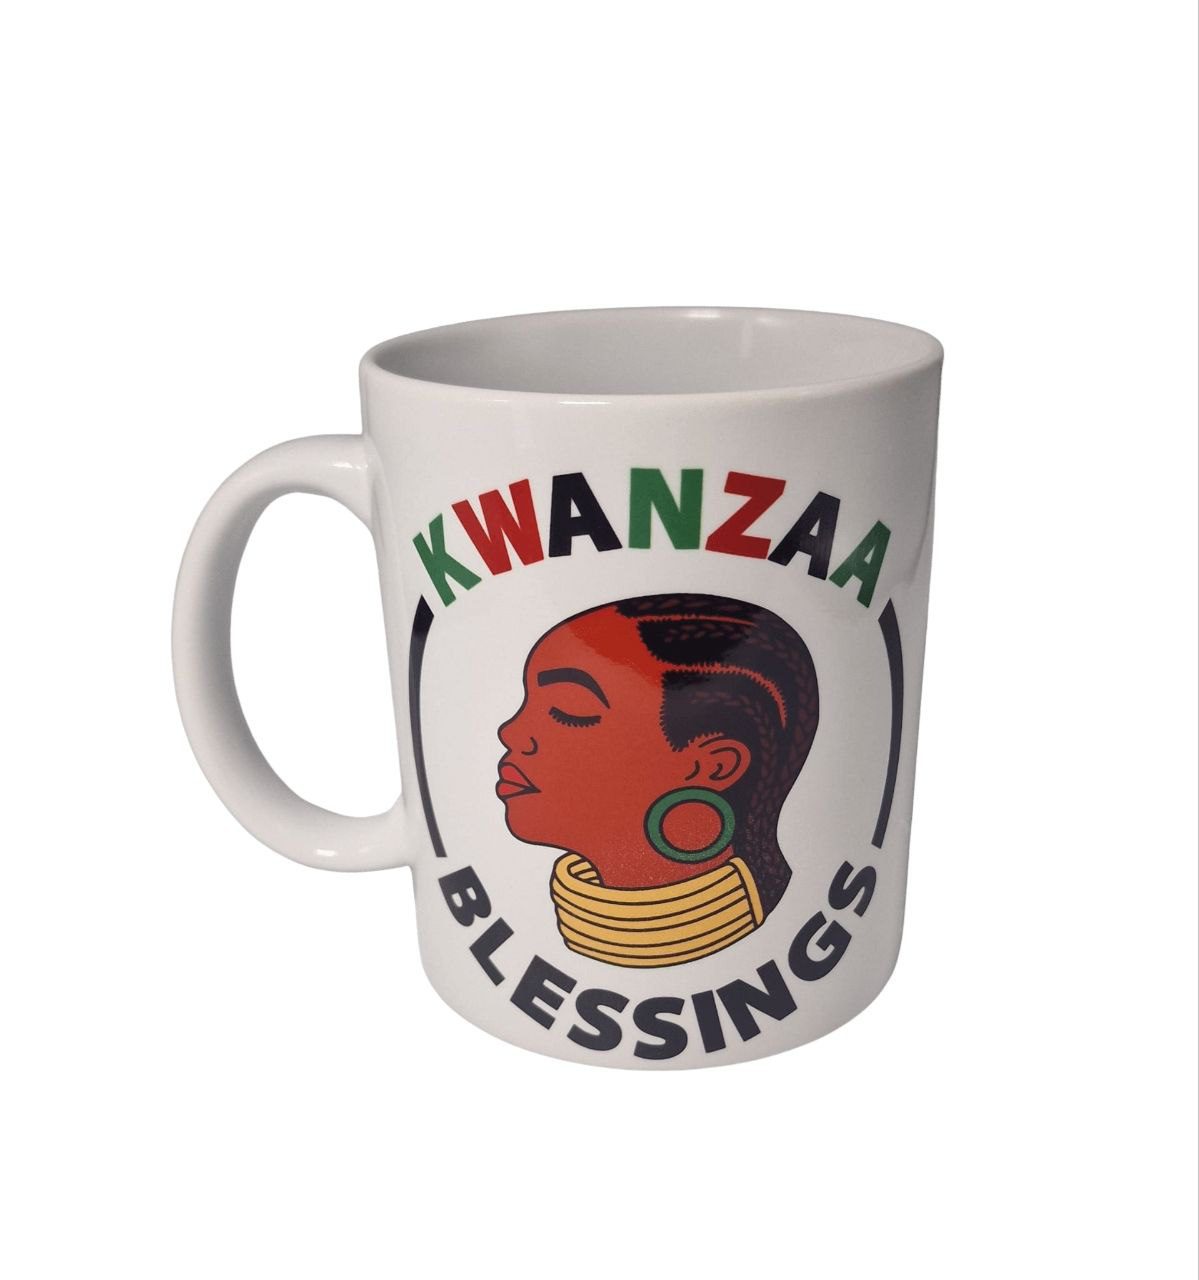 Kwanzaa Blessings Ceramic Mug